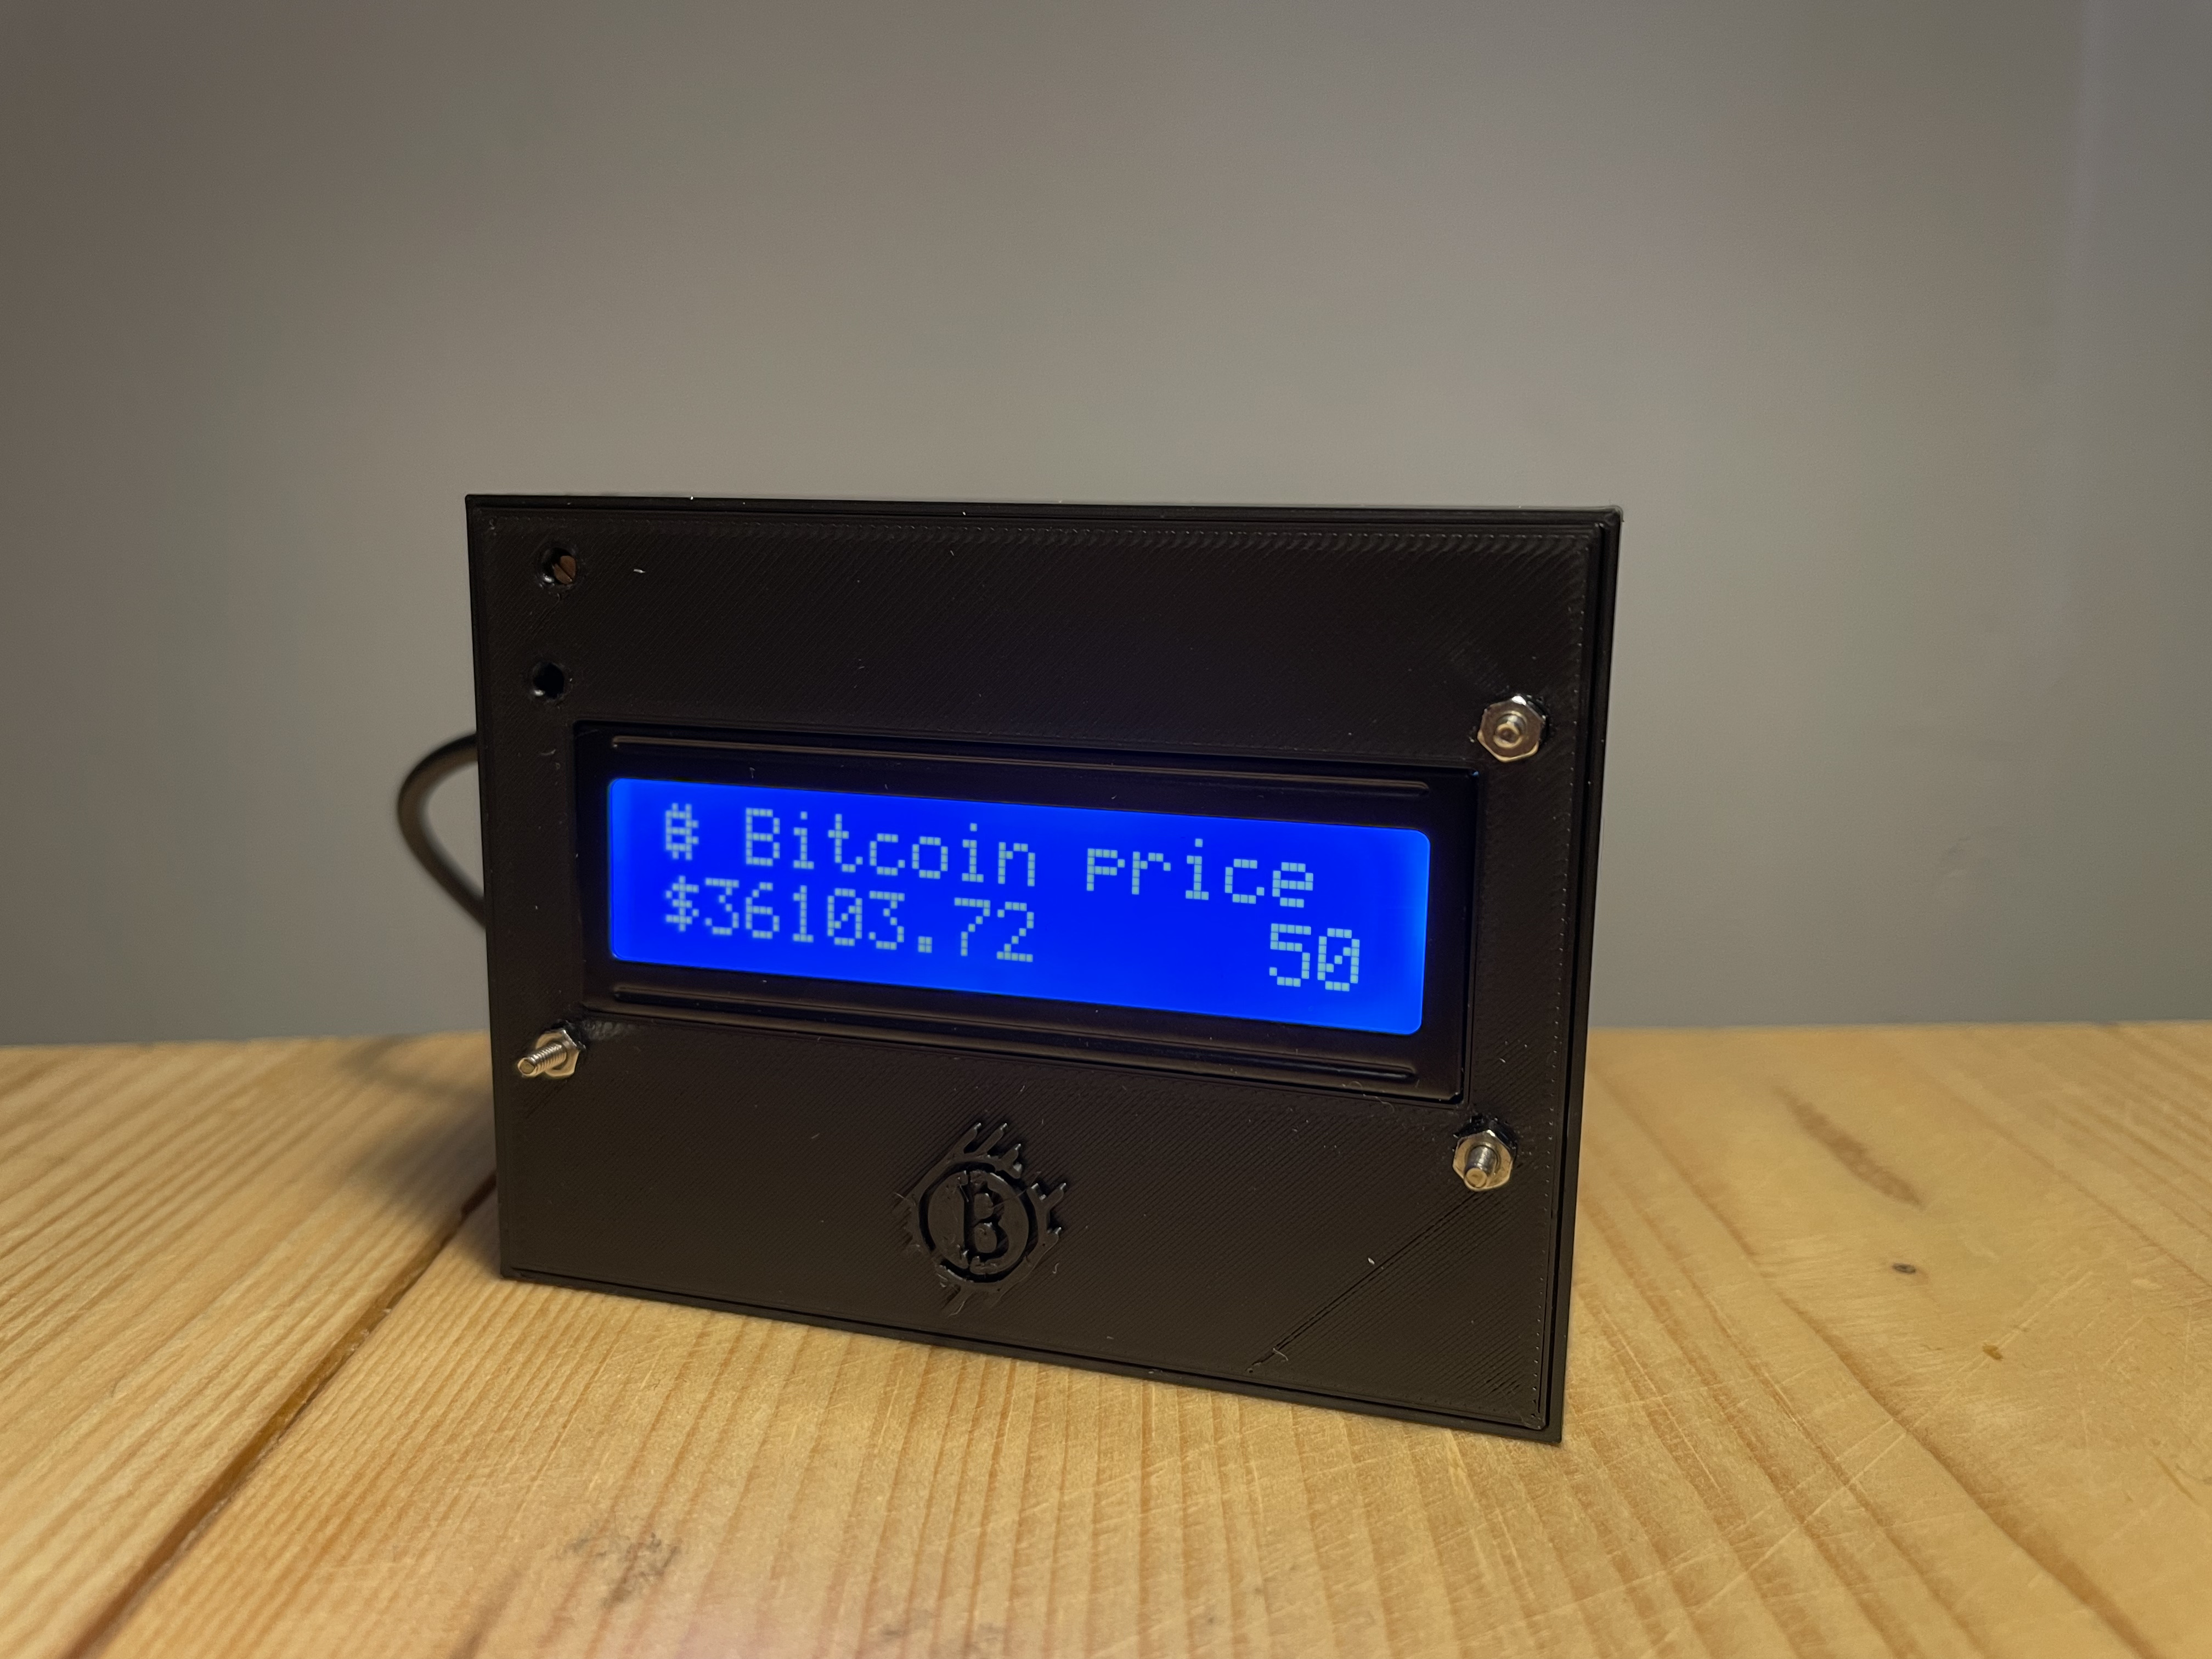 Wemos D1 Uno (Arduino Uno) + 16x2 LCD keypad shield case - Bitcoin ticker